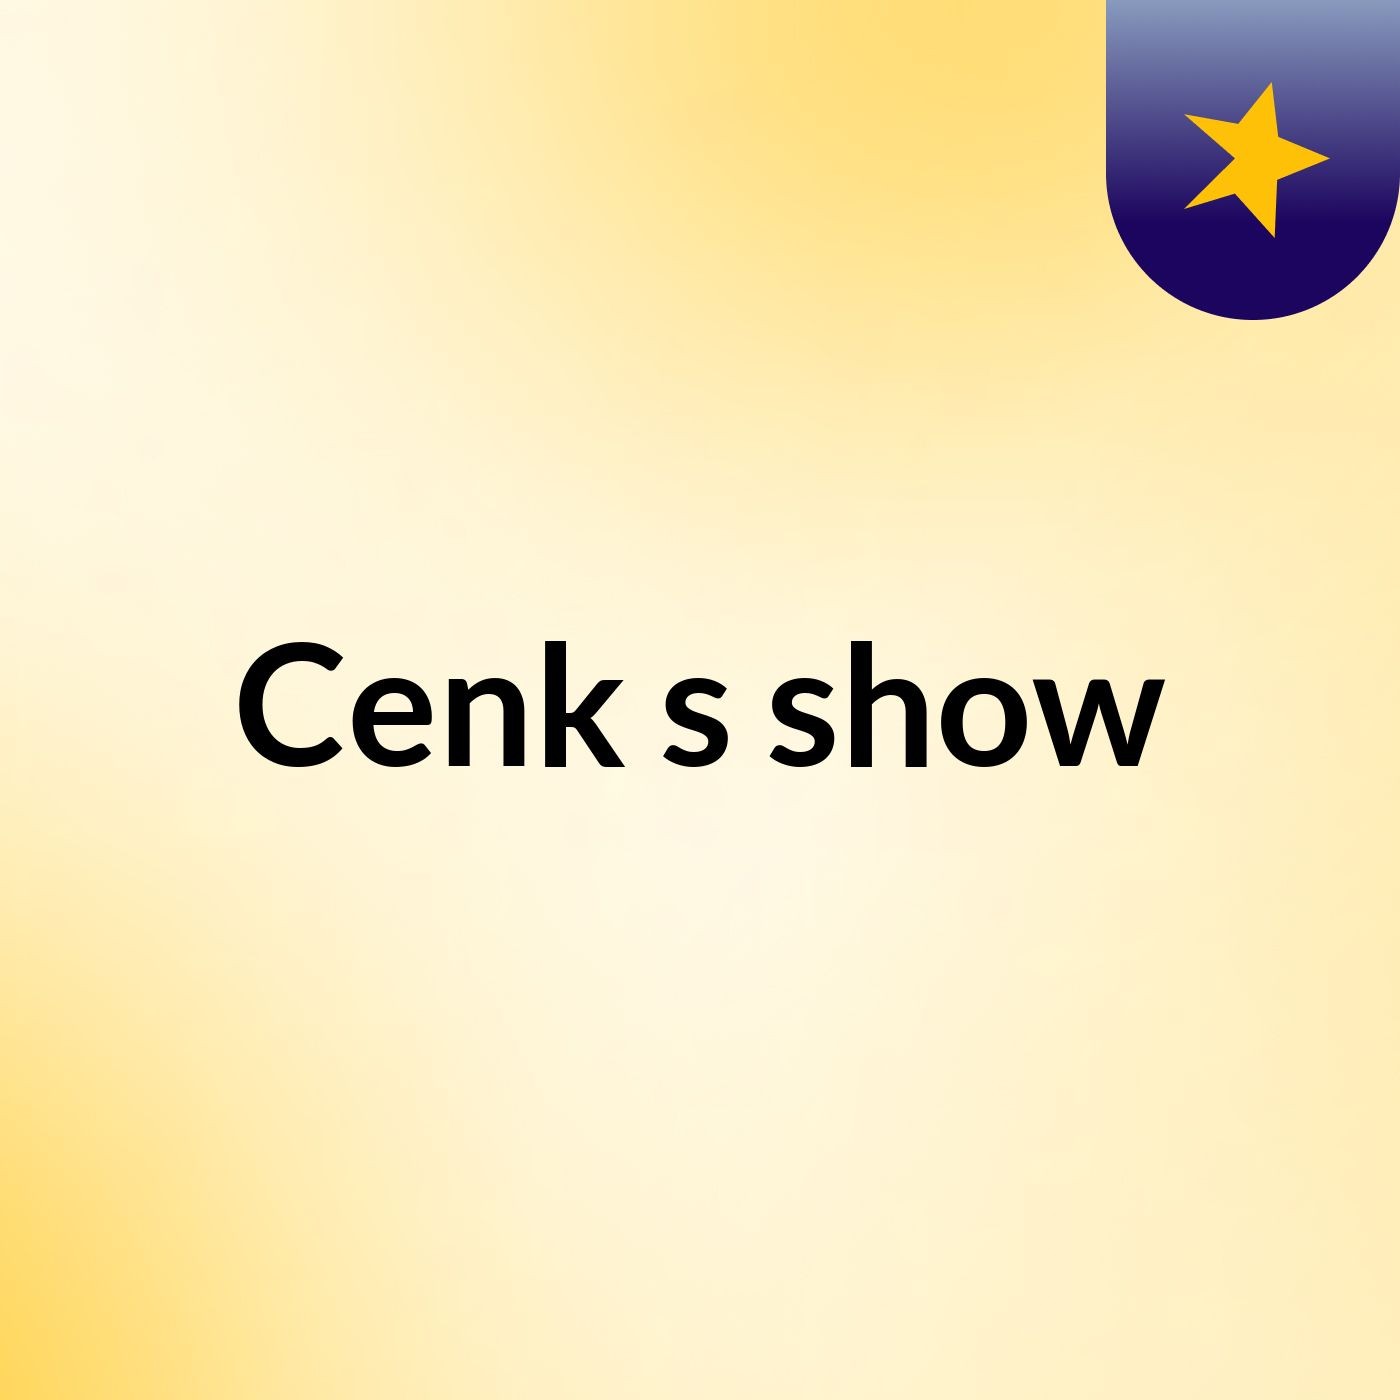 Cenk's show